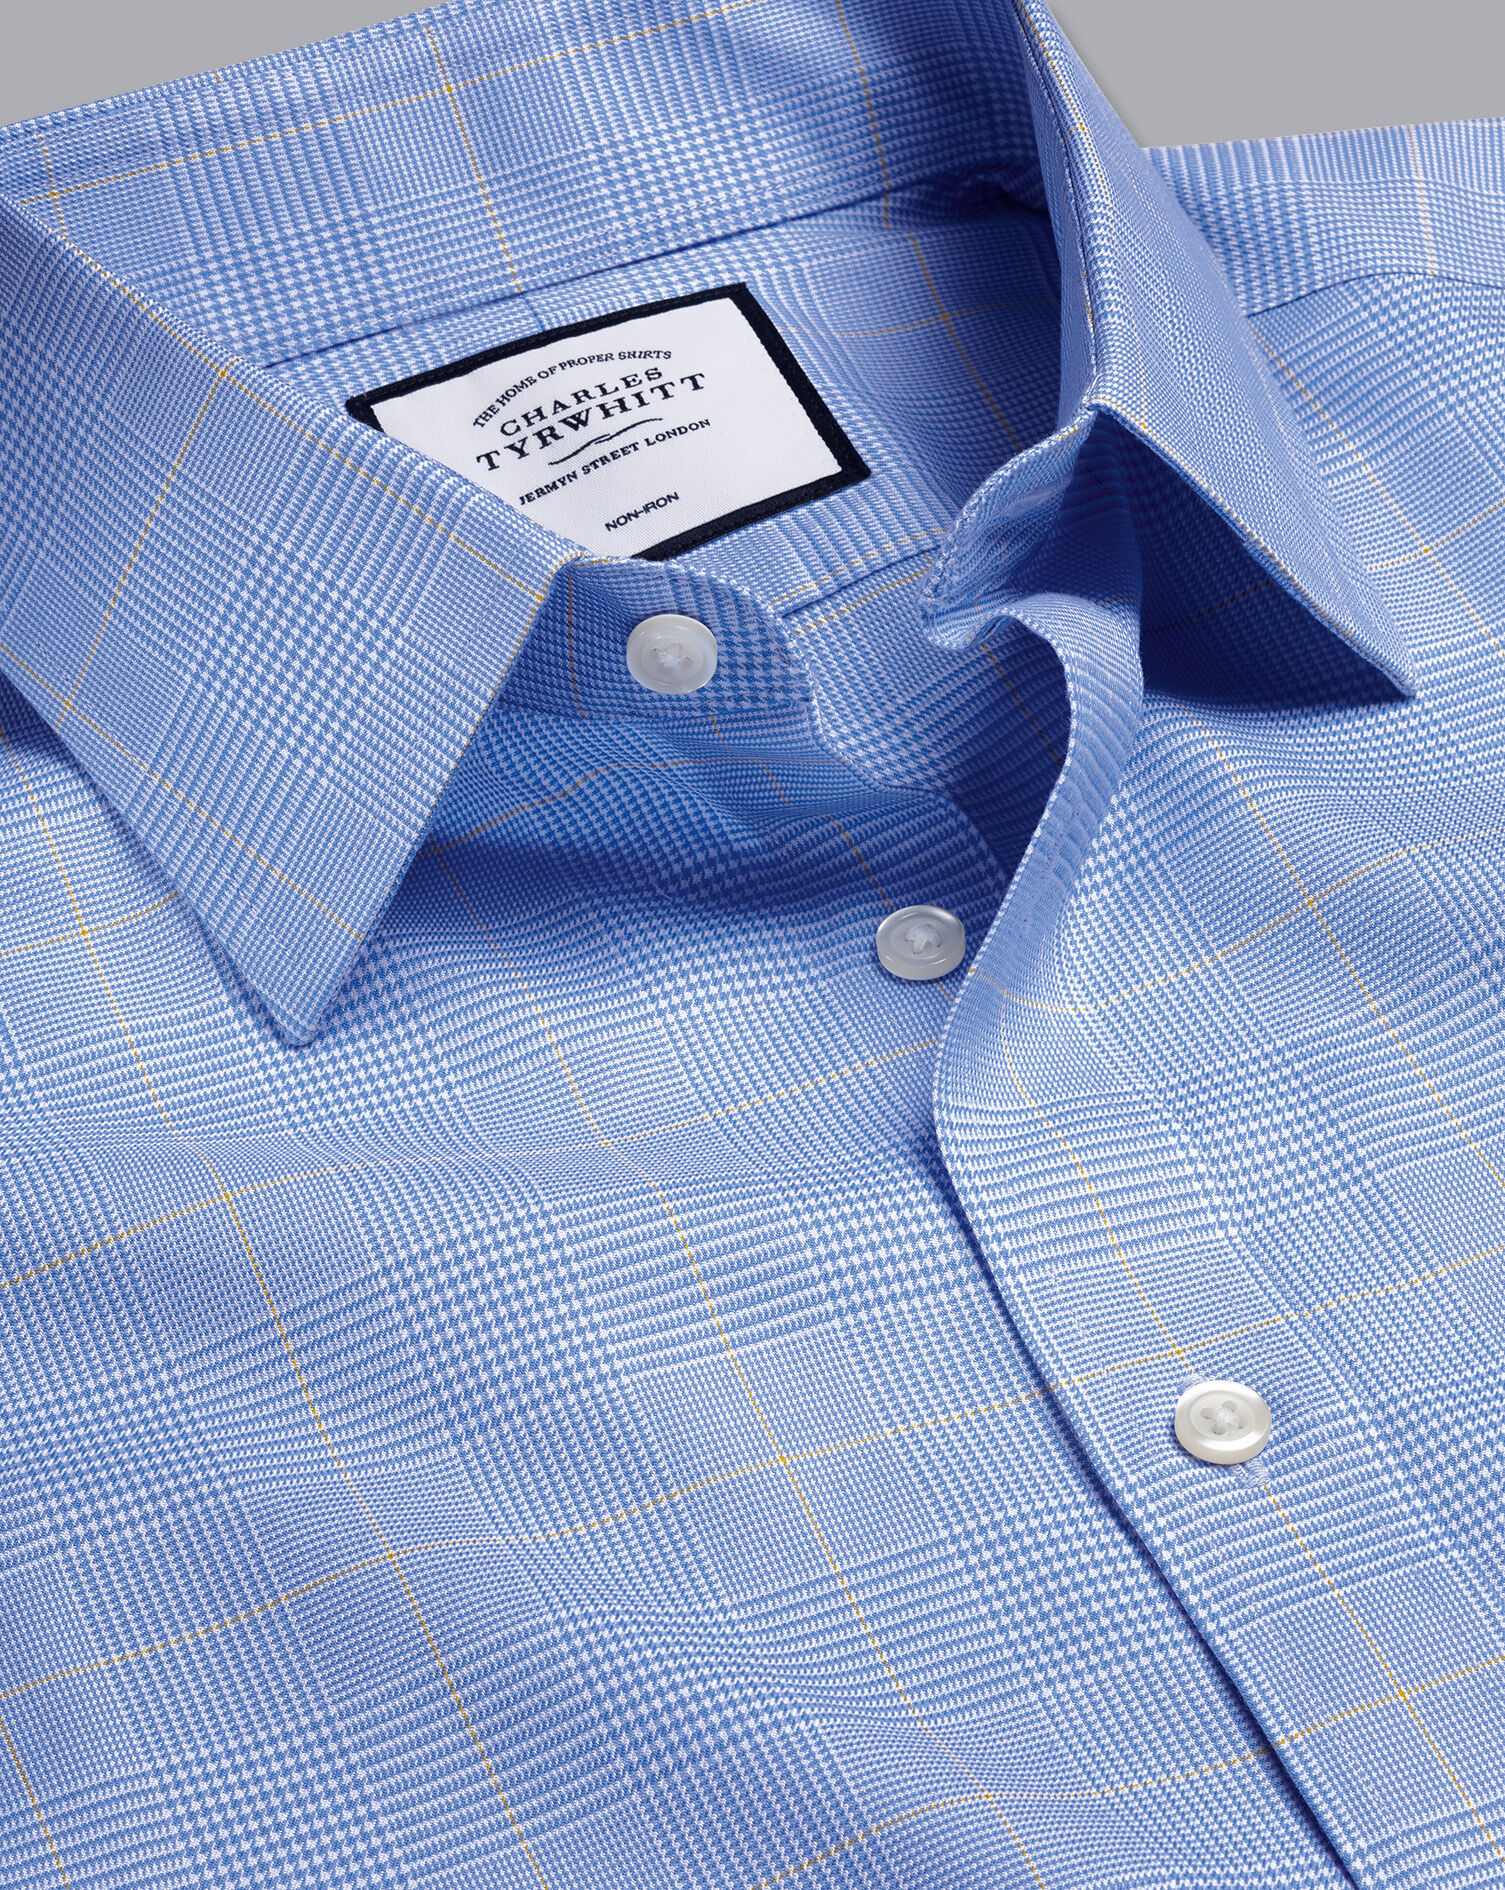 Charles Tyrwhitt Charles Tyrwhitt Shirt 100% Cotton Blue Double Cuff 16" Collar XL 